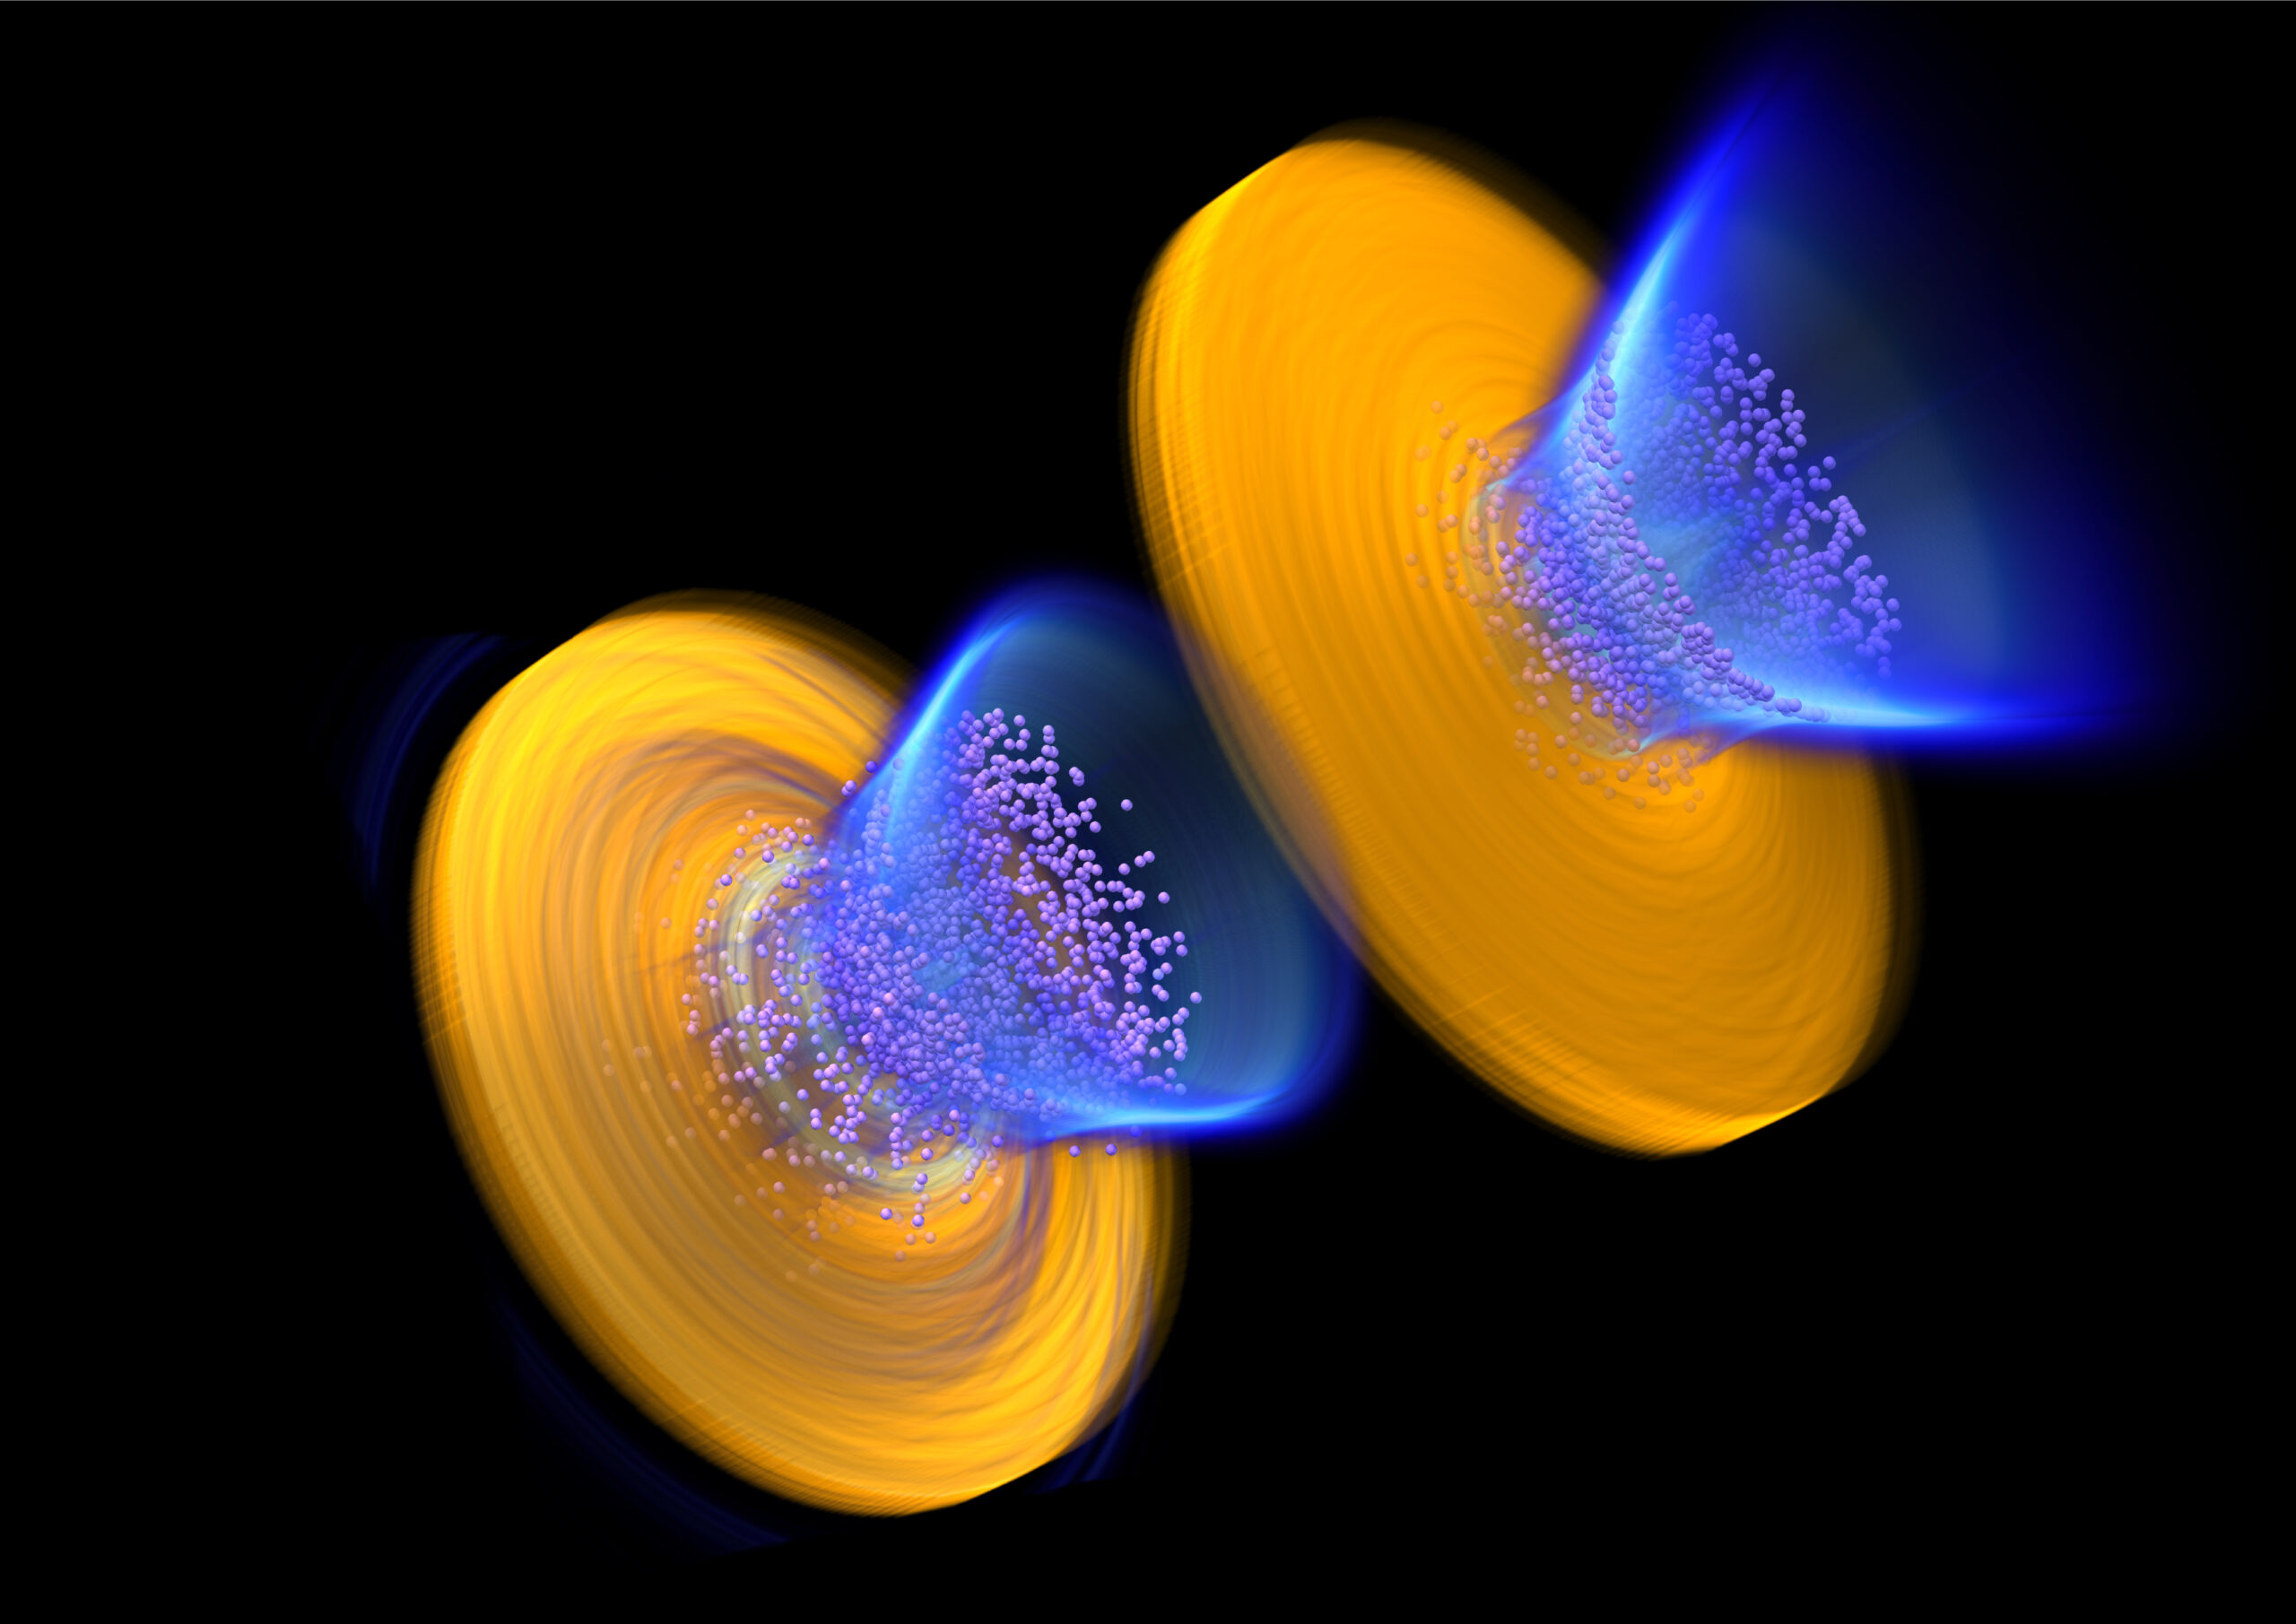 Diagram showing electron movements